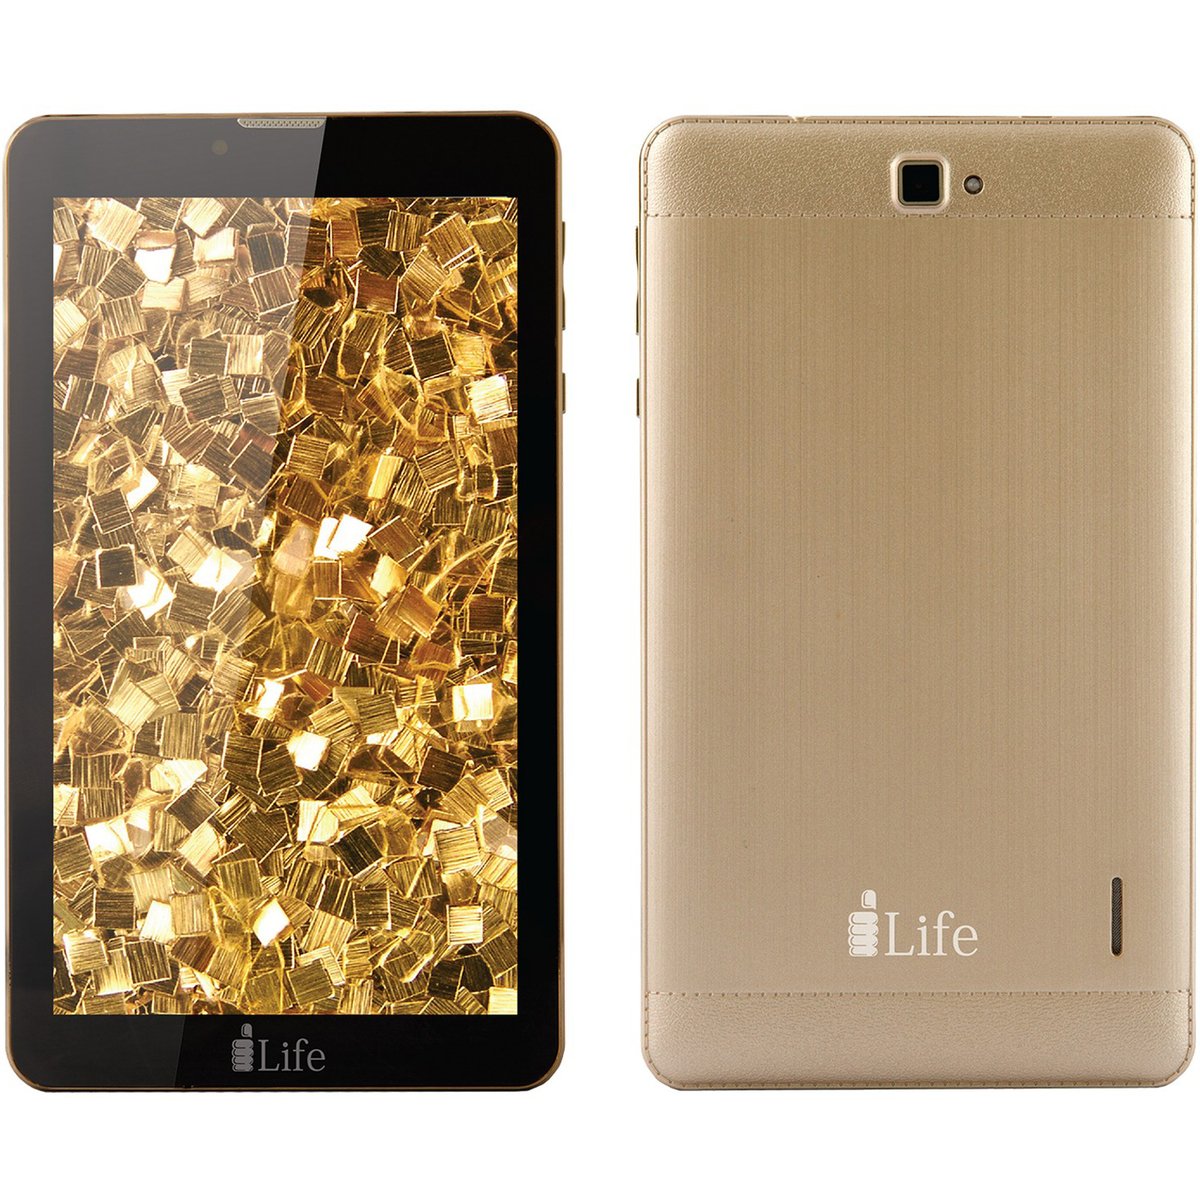 I-Life Tablet K4700W 7inch 16 GB,4G Wifi White Gold